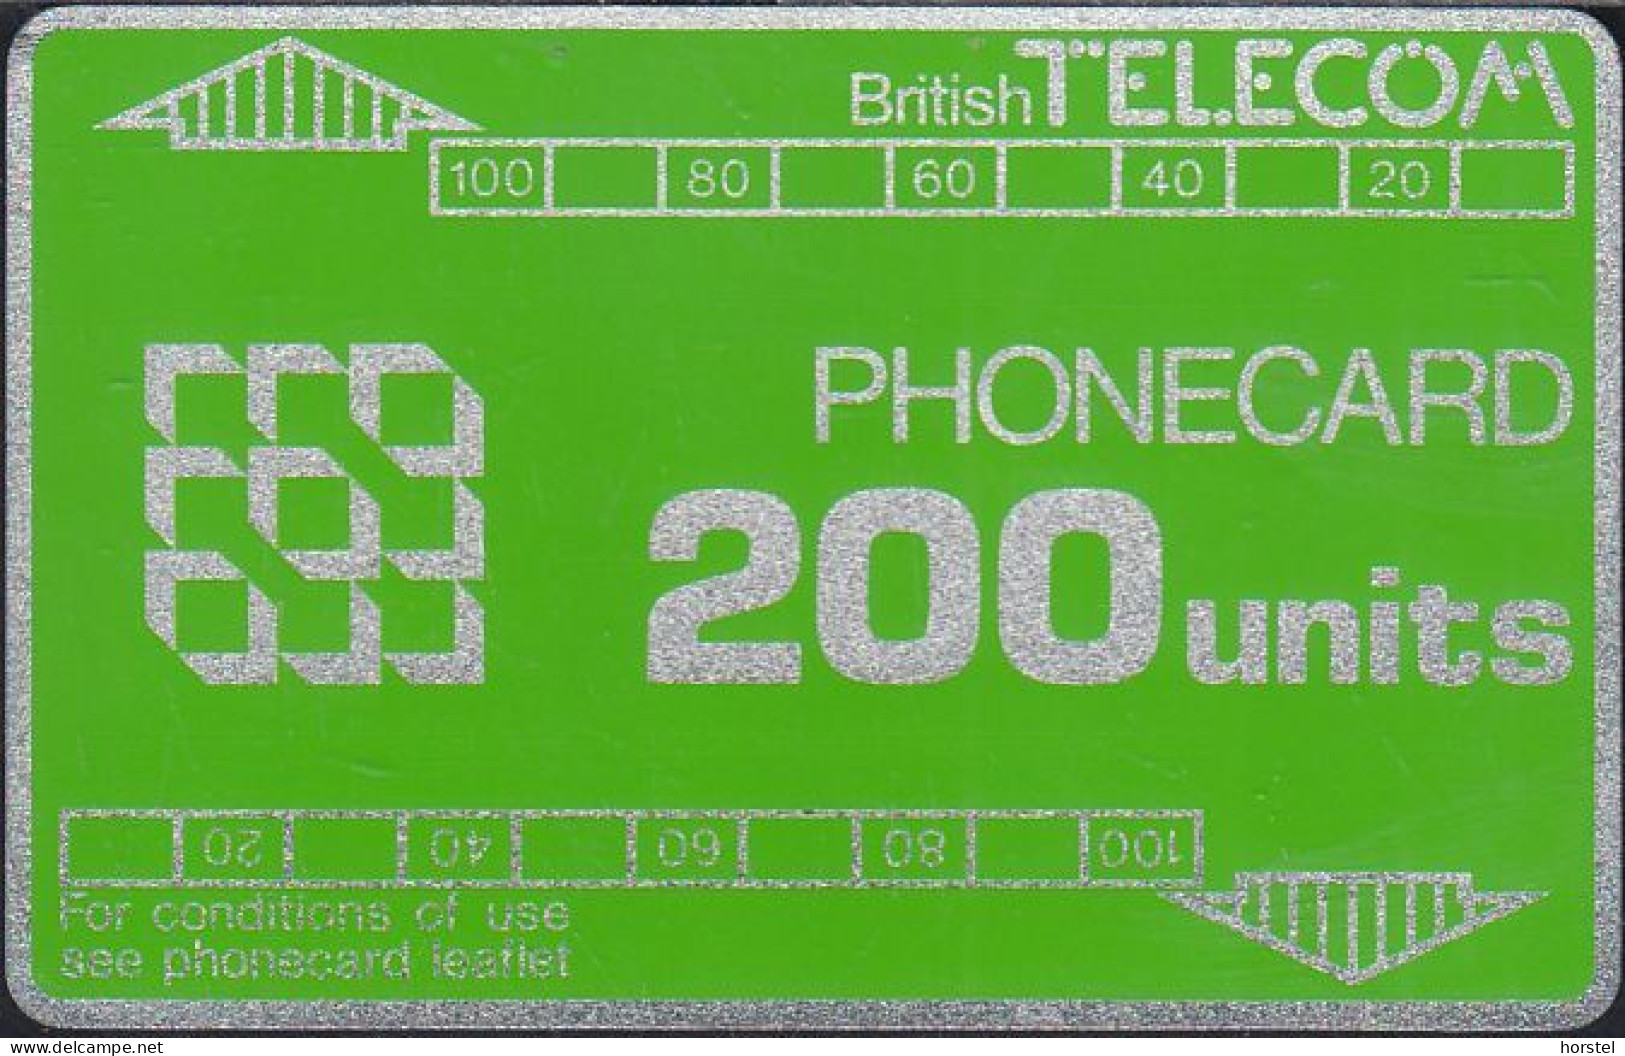 UK - British Telecom L&G  BTD011 - 2nd Issue Phonecard Definitive - 200 Units - 412A - BT Definitive Issues